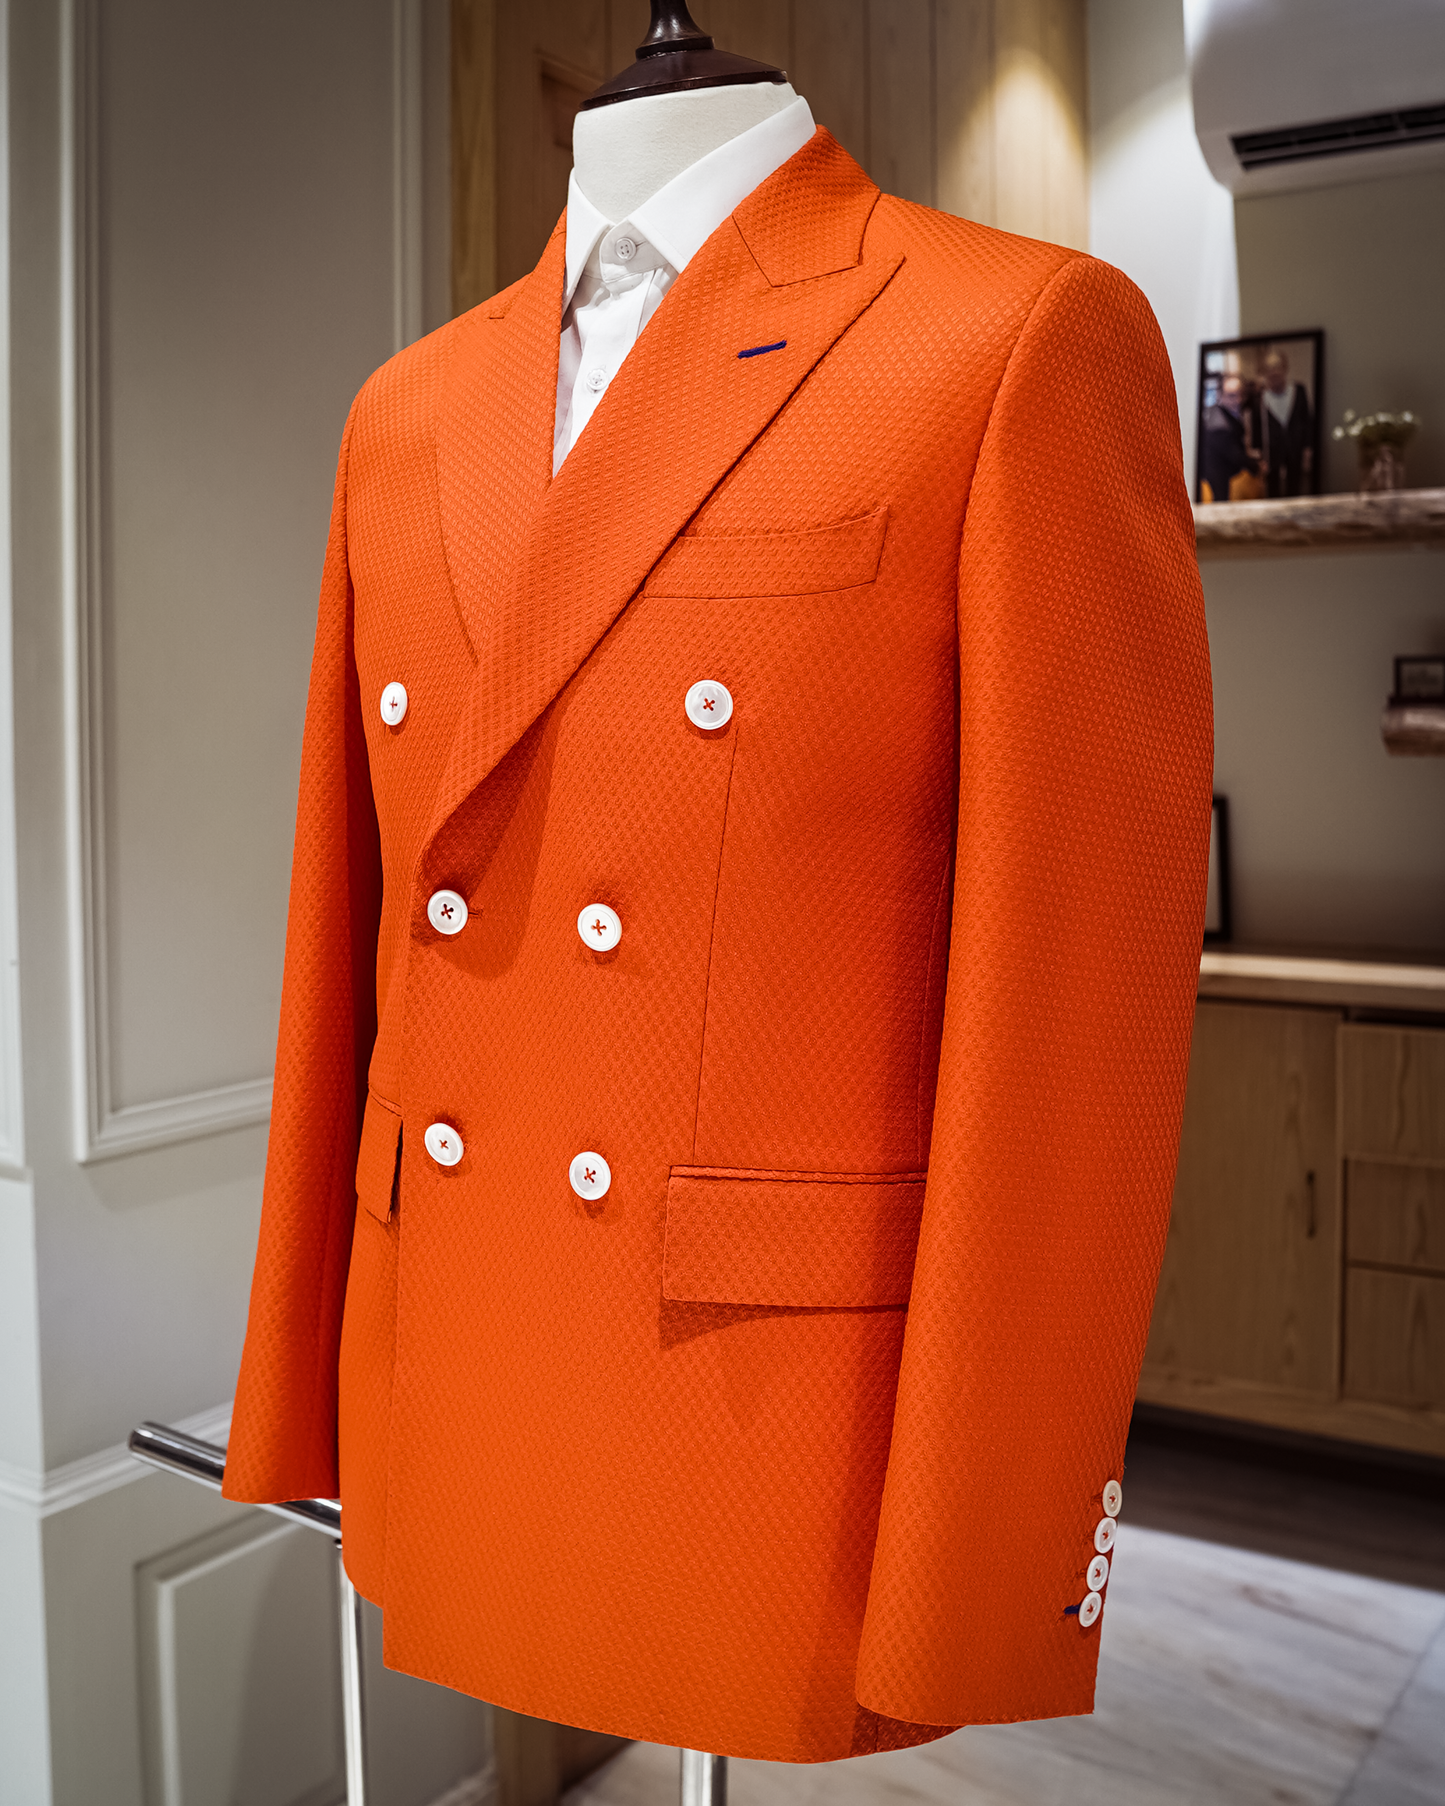 Double Breasted Orange Bespoke Suit